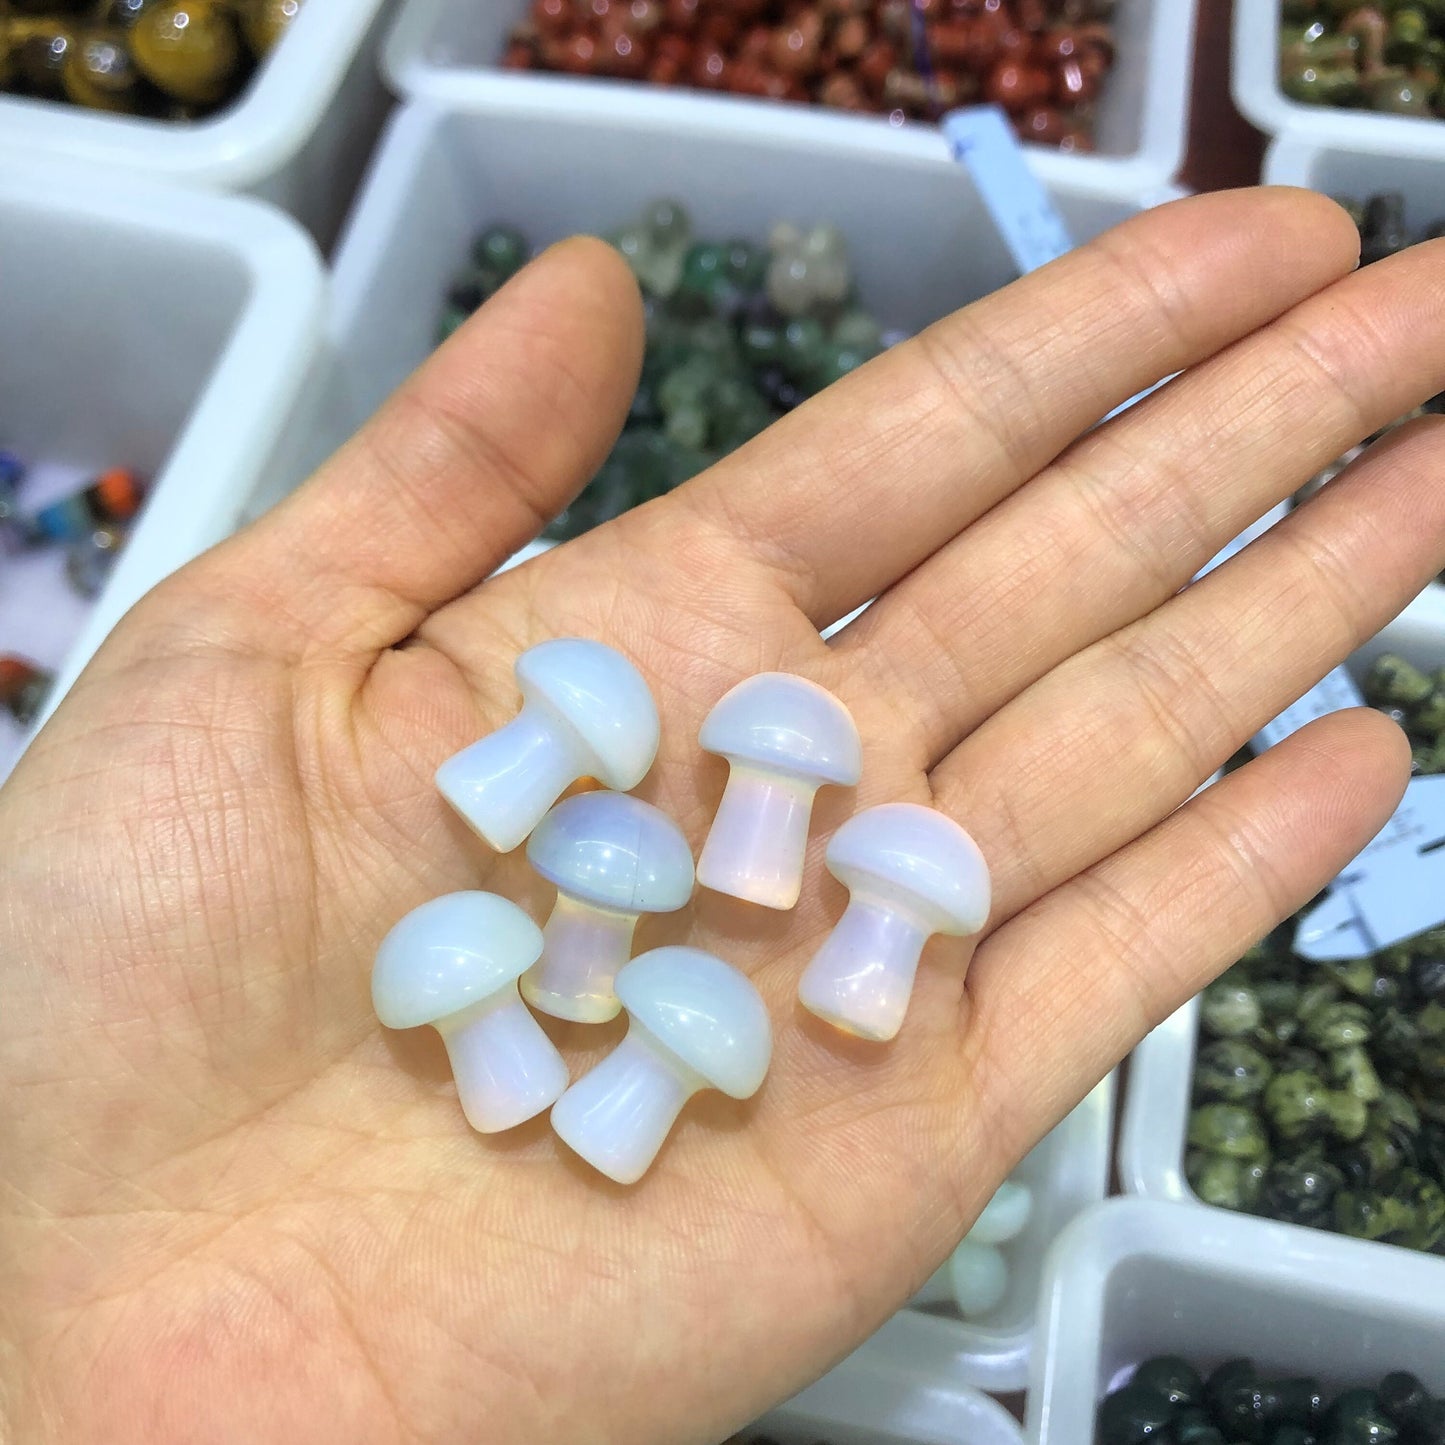 Opal Mushroom Shaped Polished Stones Decor Set - 10Pcs Healing Gifts with Decorative Quartz Crystals